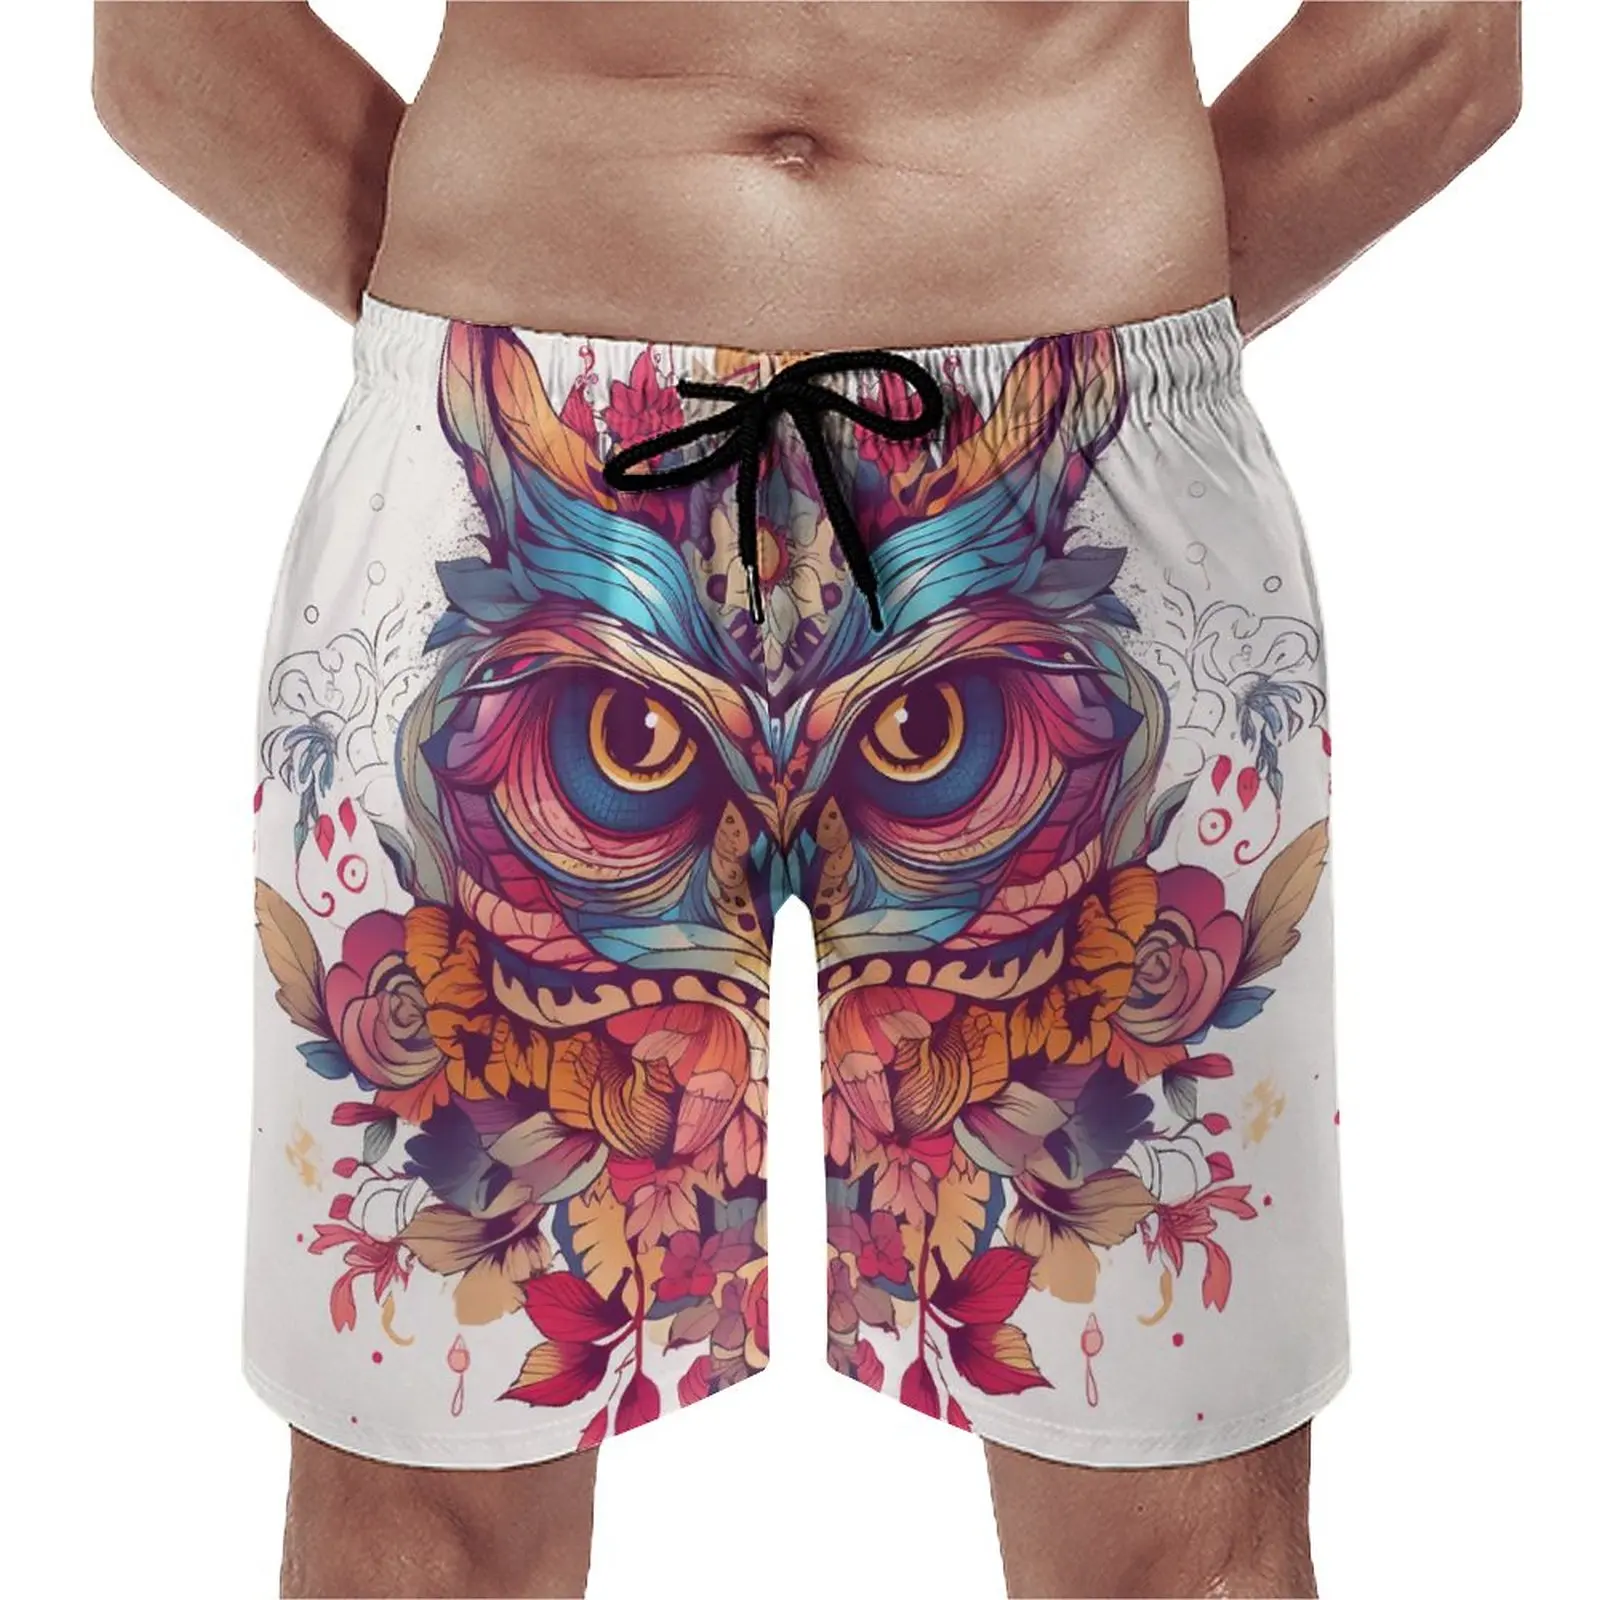 

Summer Board Shorts Owl Sports Surf Floral Mandala Printed Beach Short Pants Fashion Quick Dry Swimming Trunks Plus Size